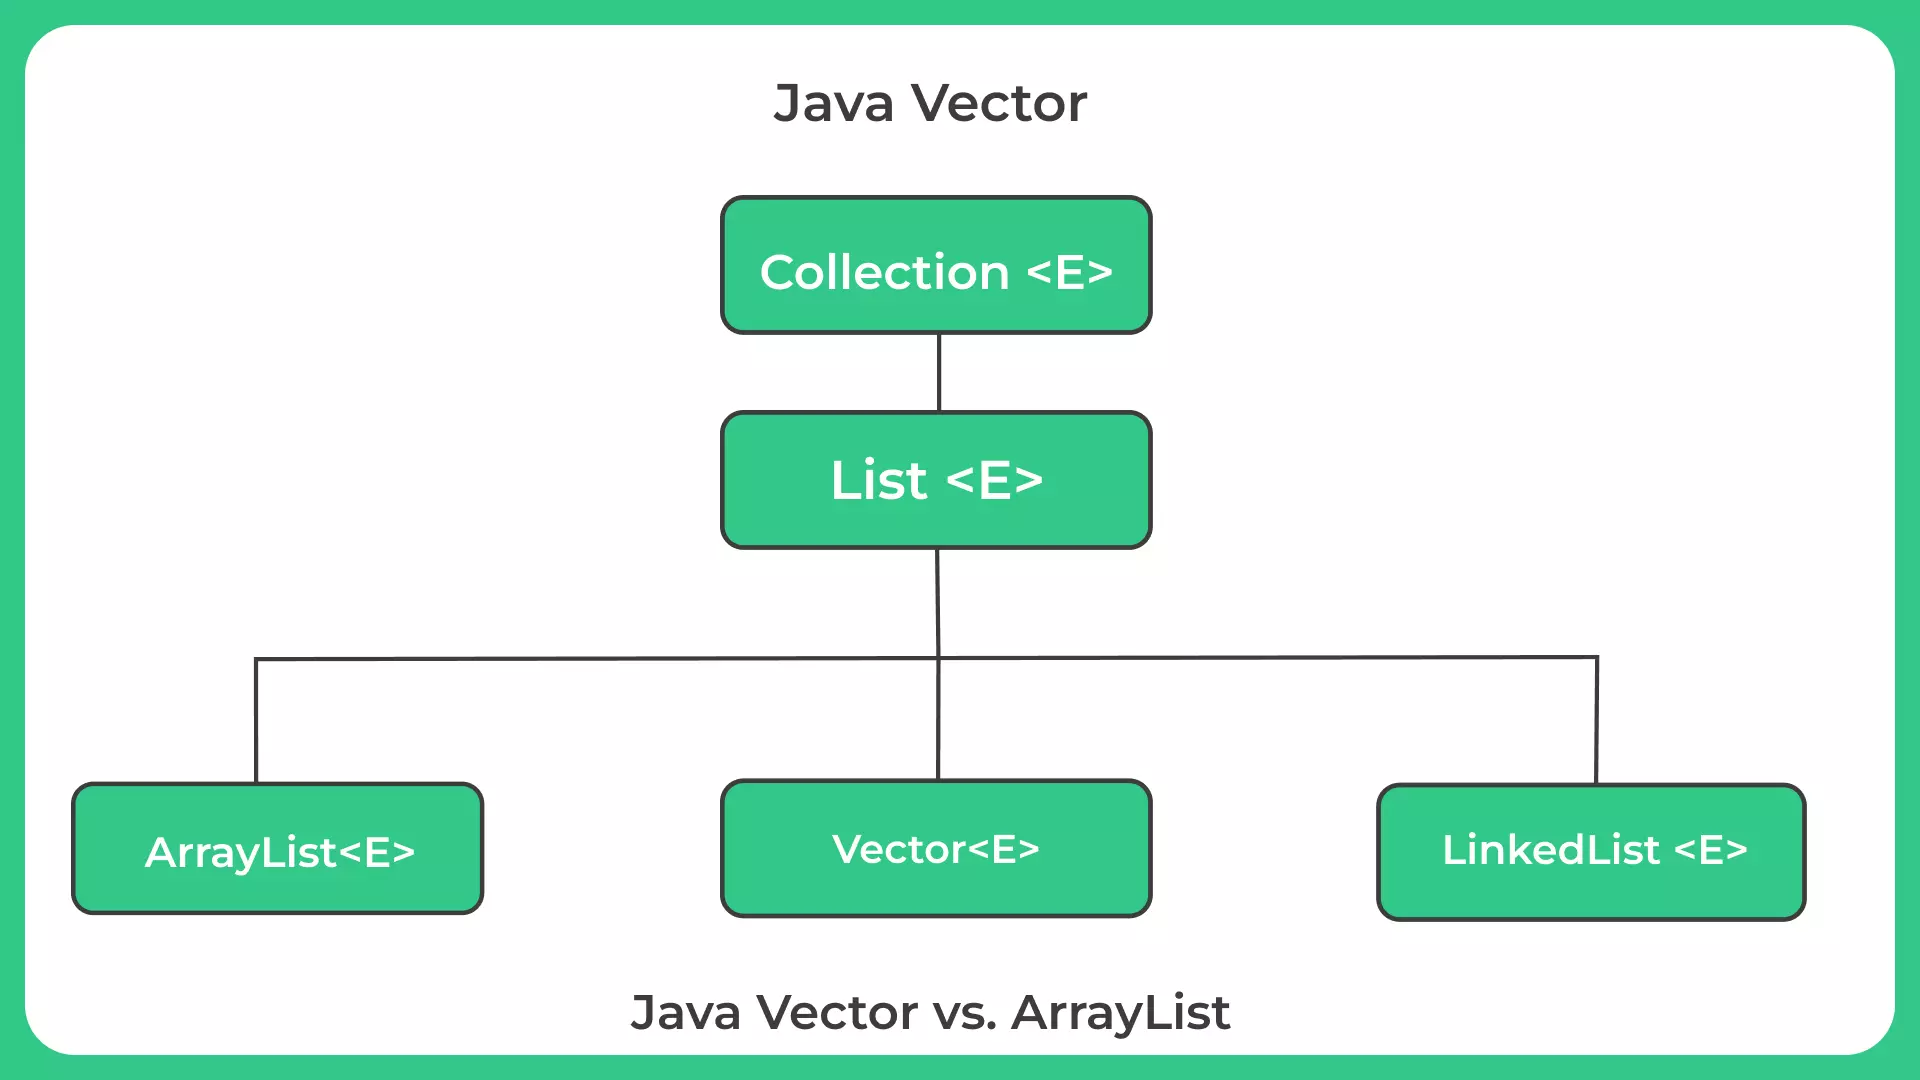 Java Vector vs ArrayList